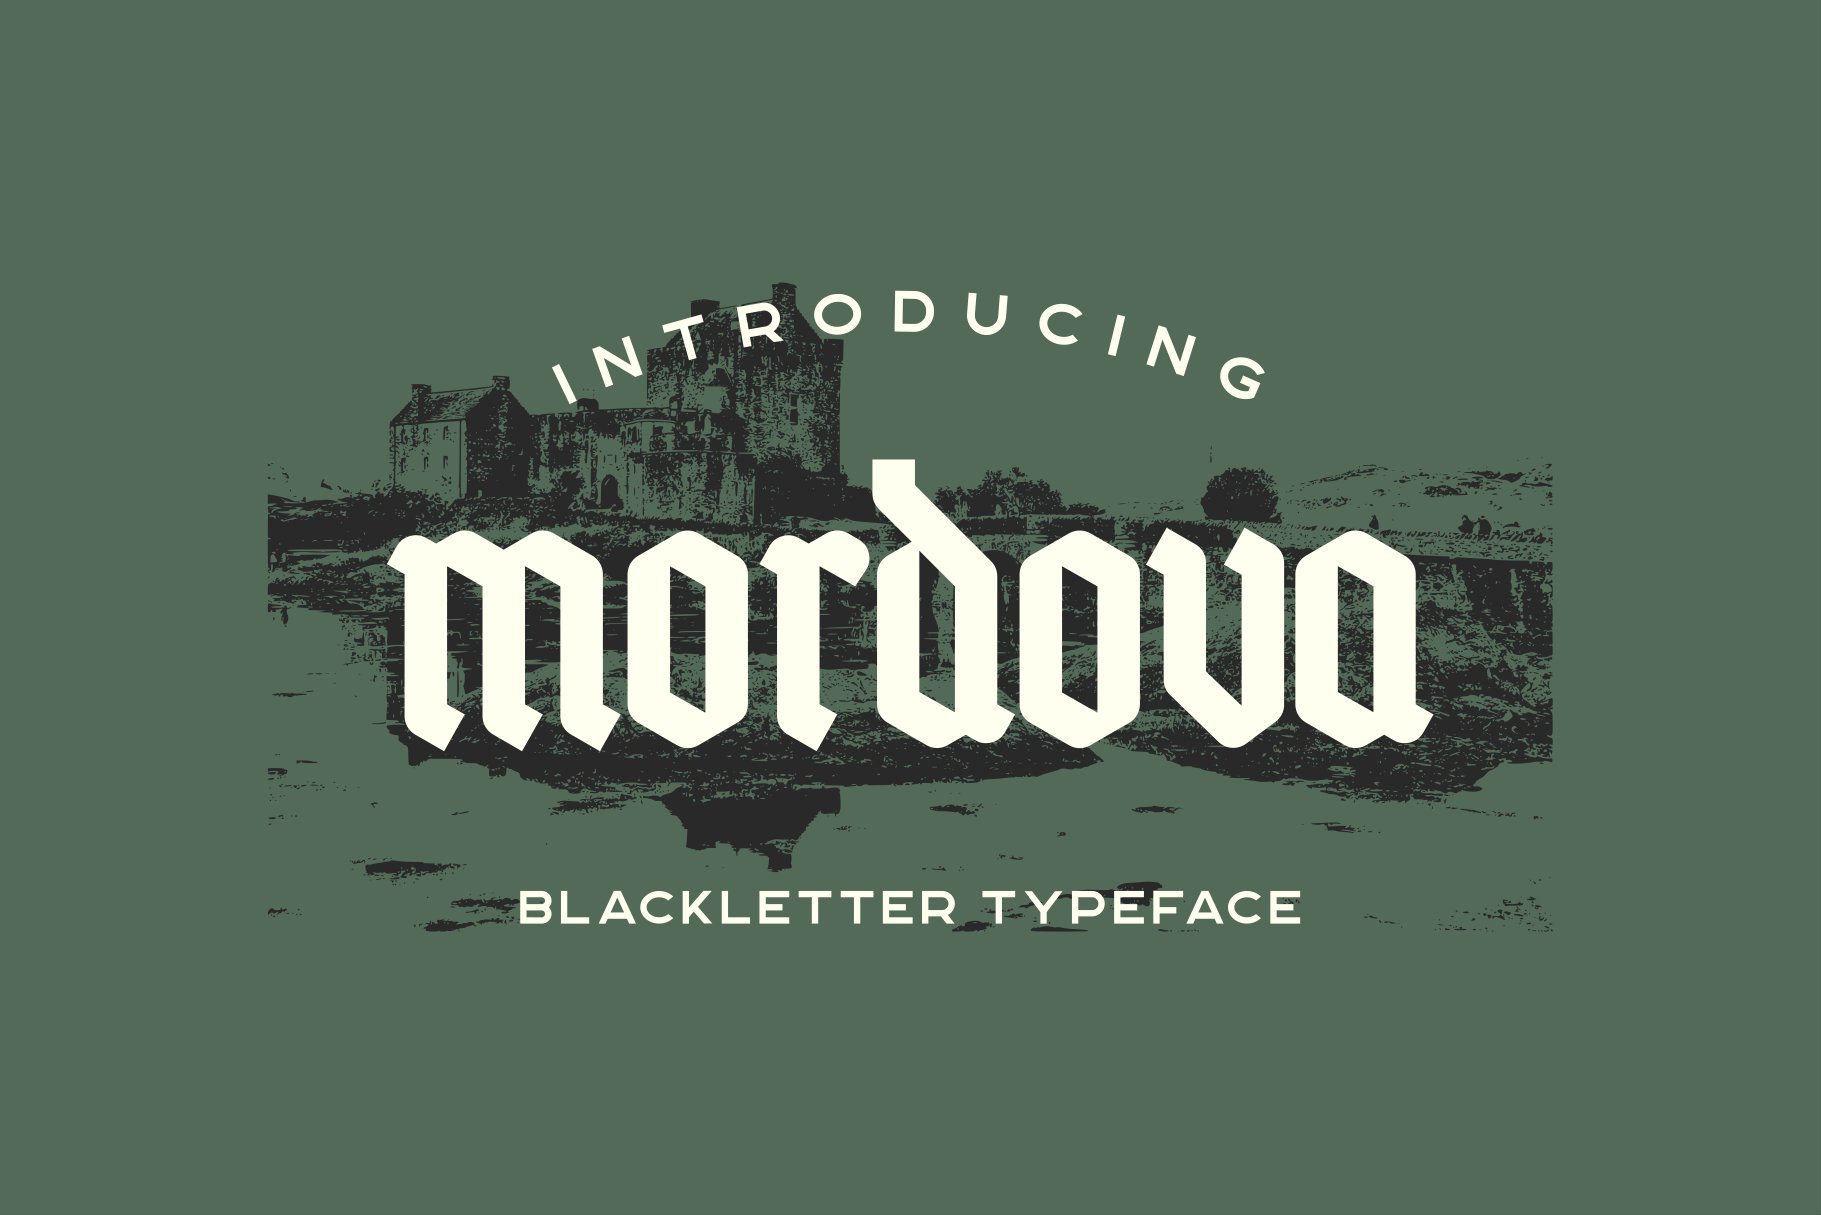 Mordova Blackletter Typeface cover image.